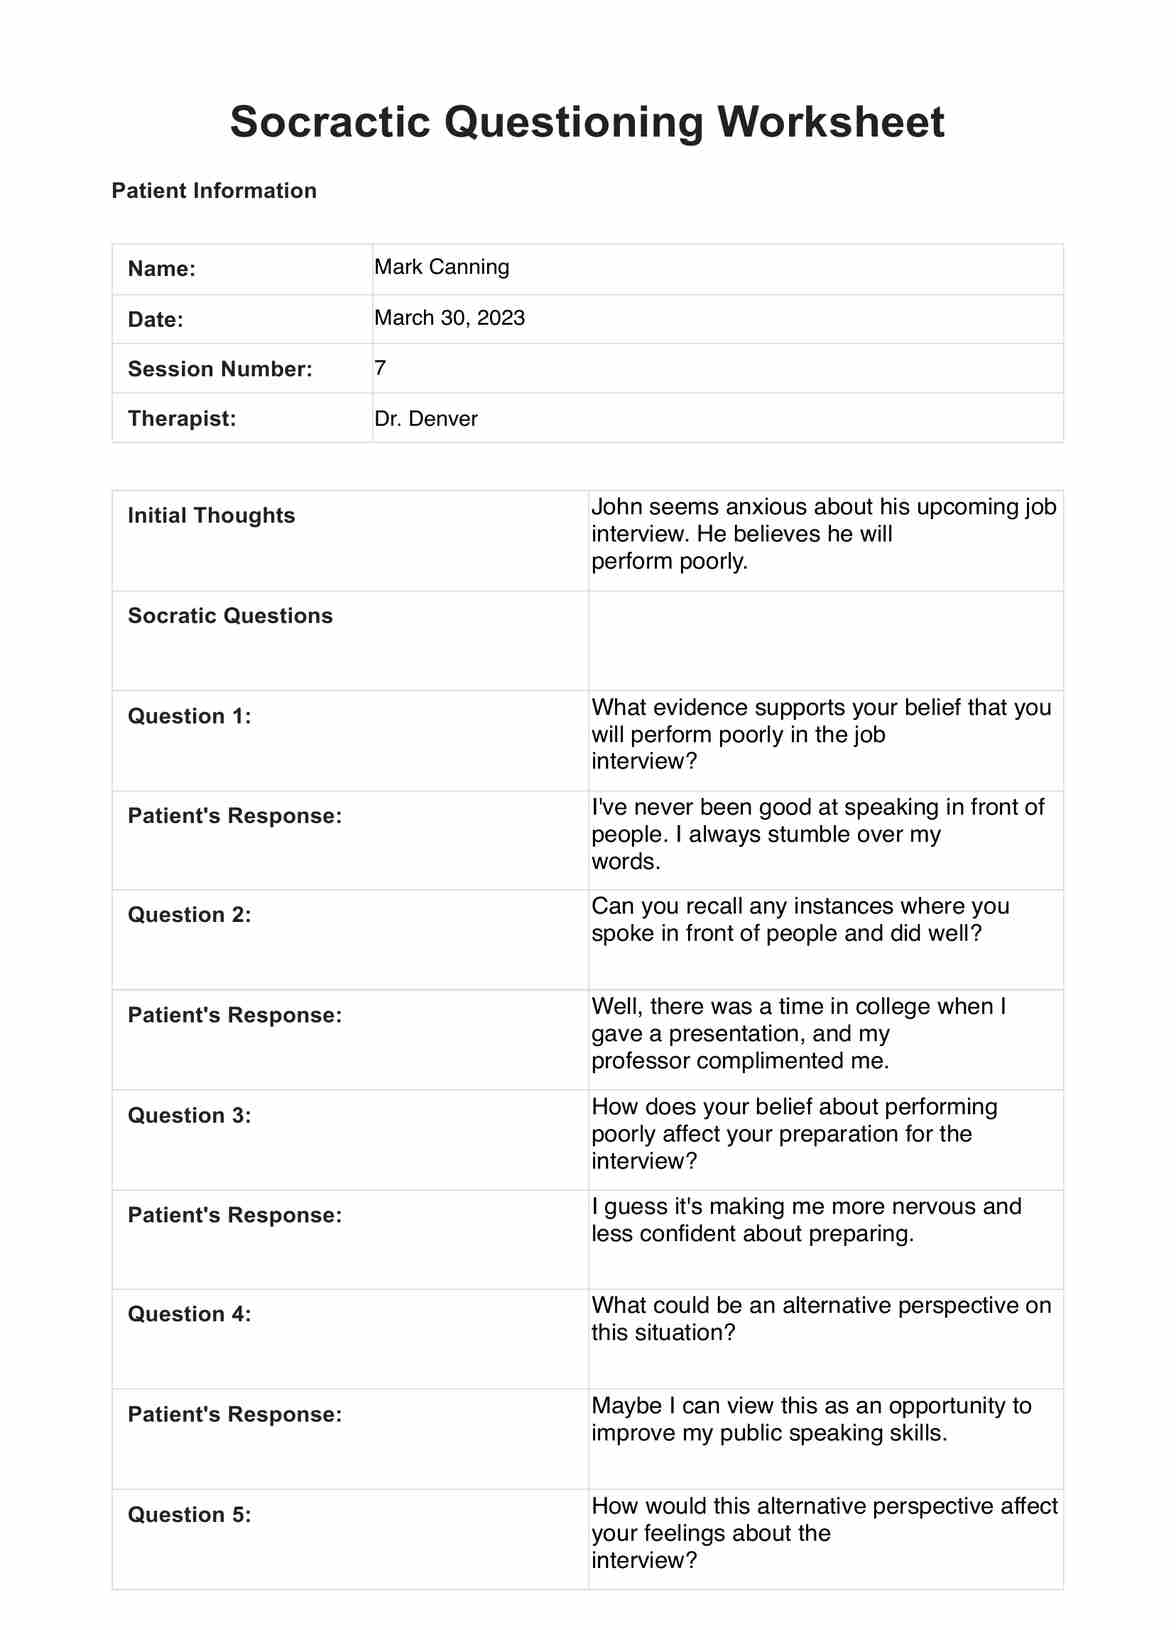 Socratic Questioning Worksheet PDF Example